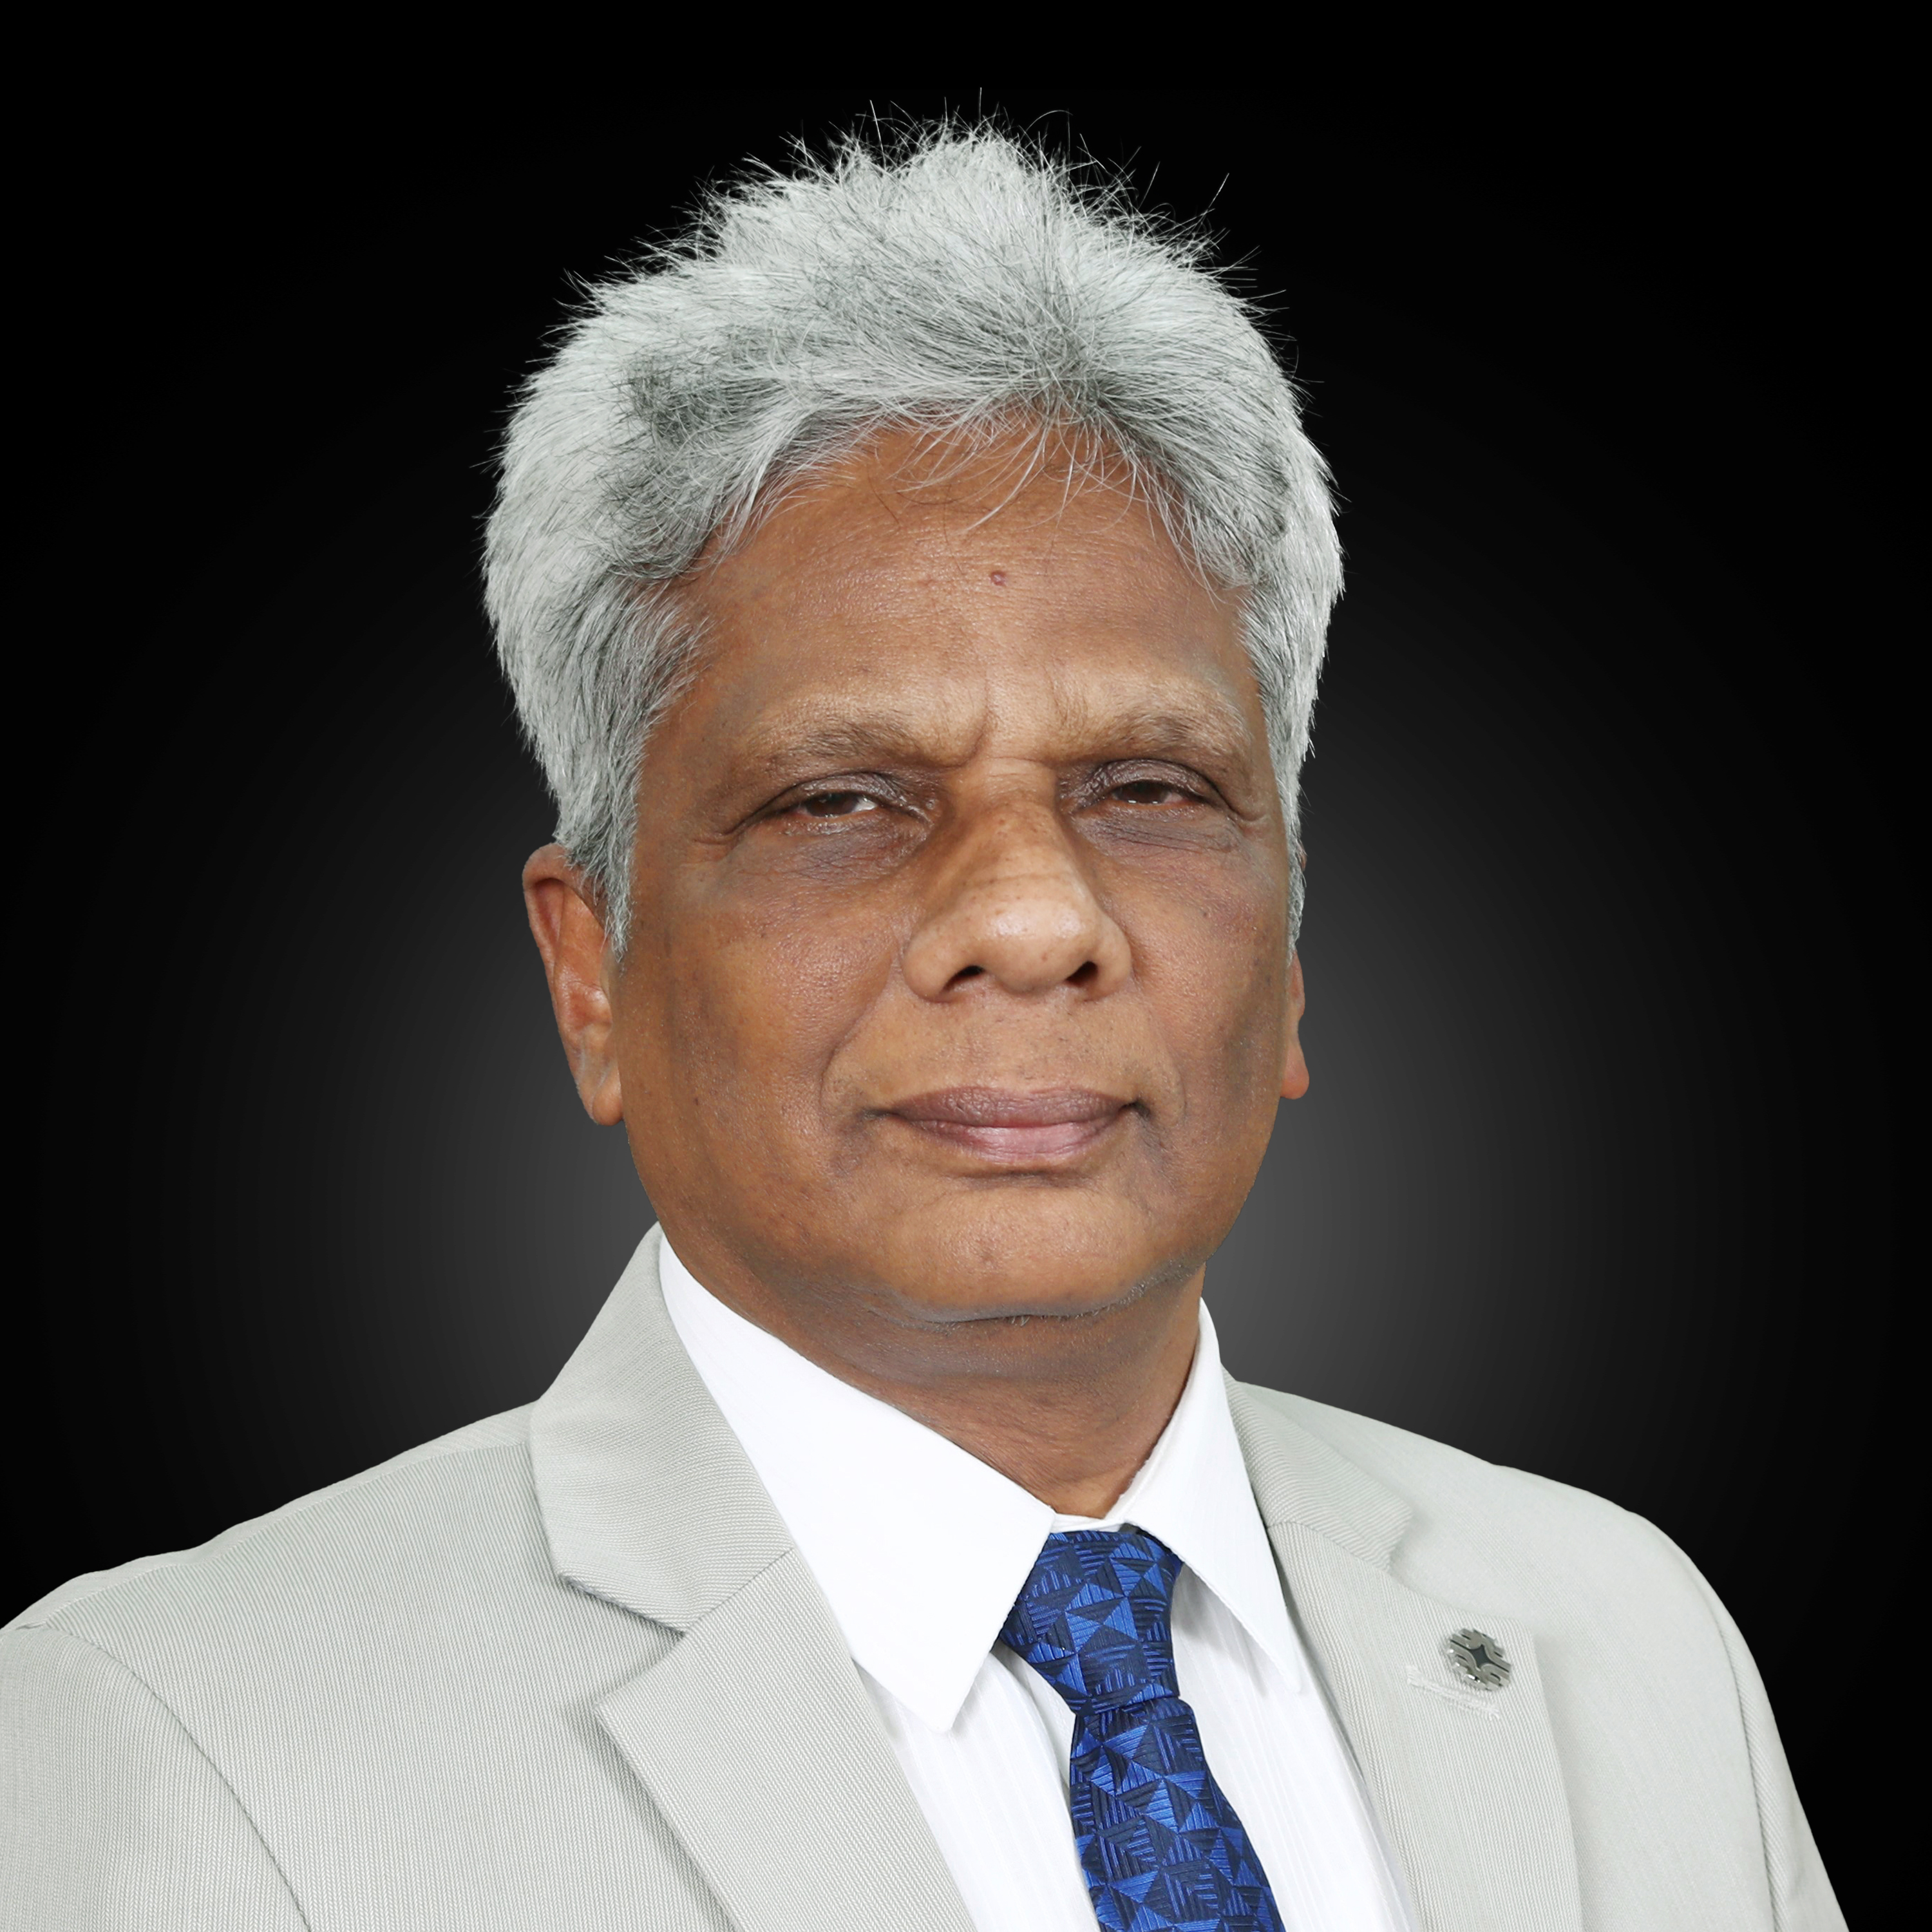 Dr. Ajit Kumar Mohanty